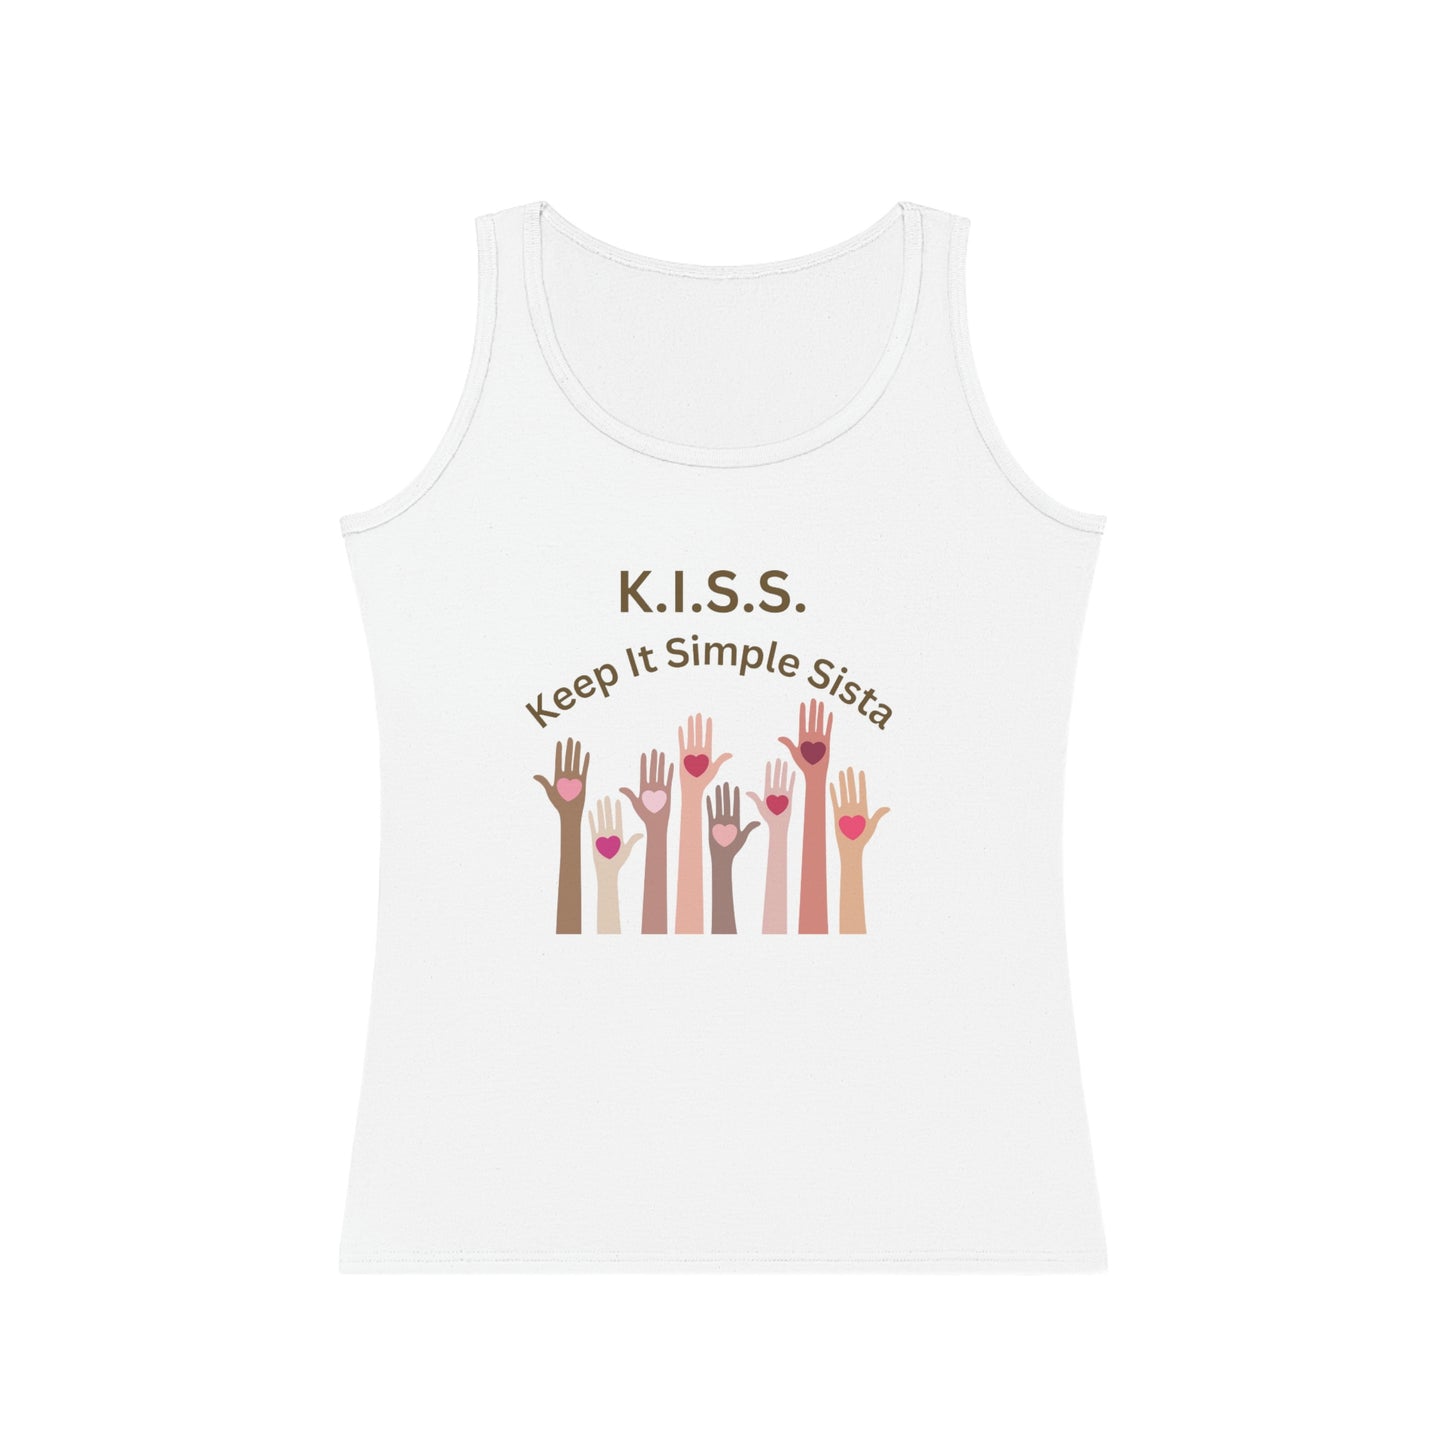 ‘Keep it Simple Sista’ Printed on Both Sides. Women's Tank Top